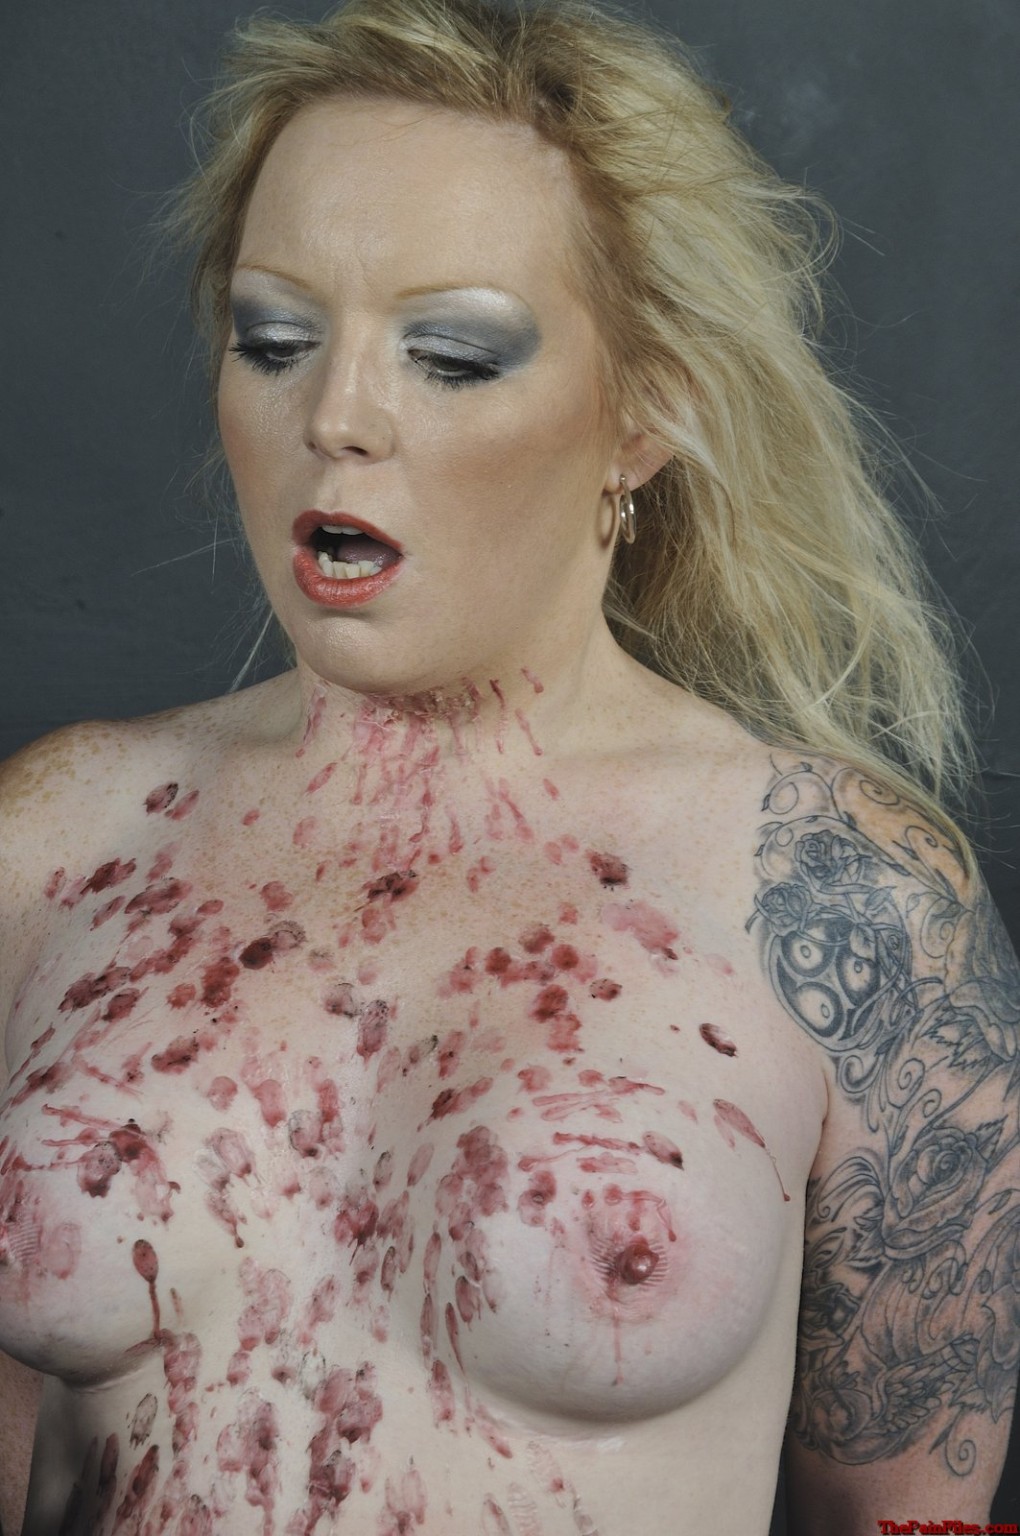 Angels punished orgasm and extreme pussy fetish of blonde uk amateur slavegirl #72067176